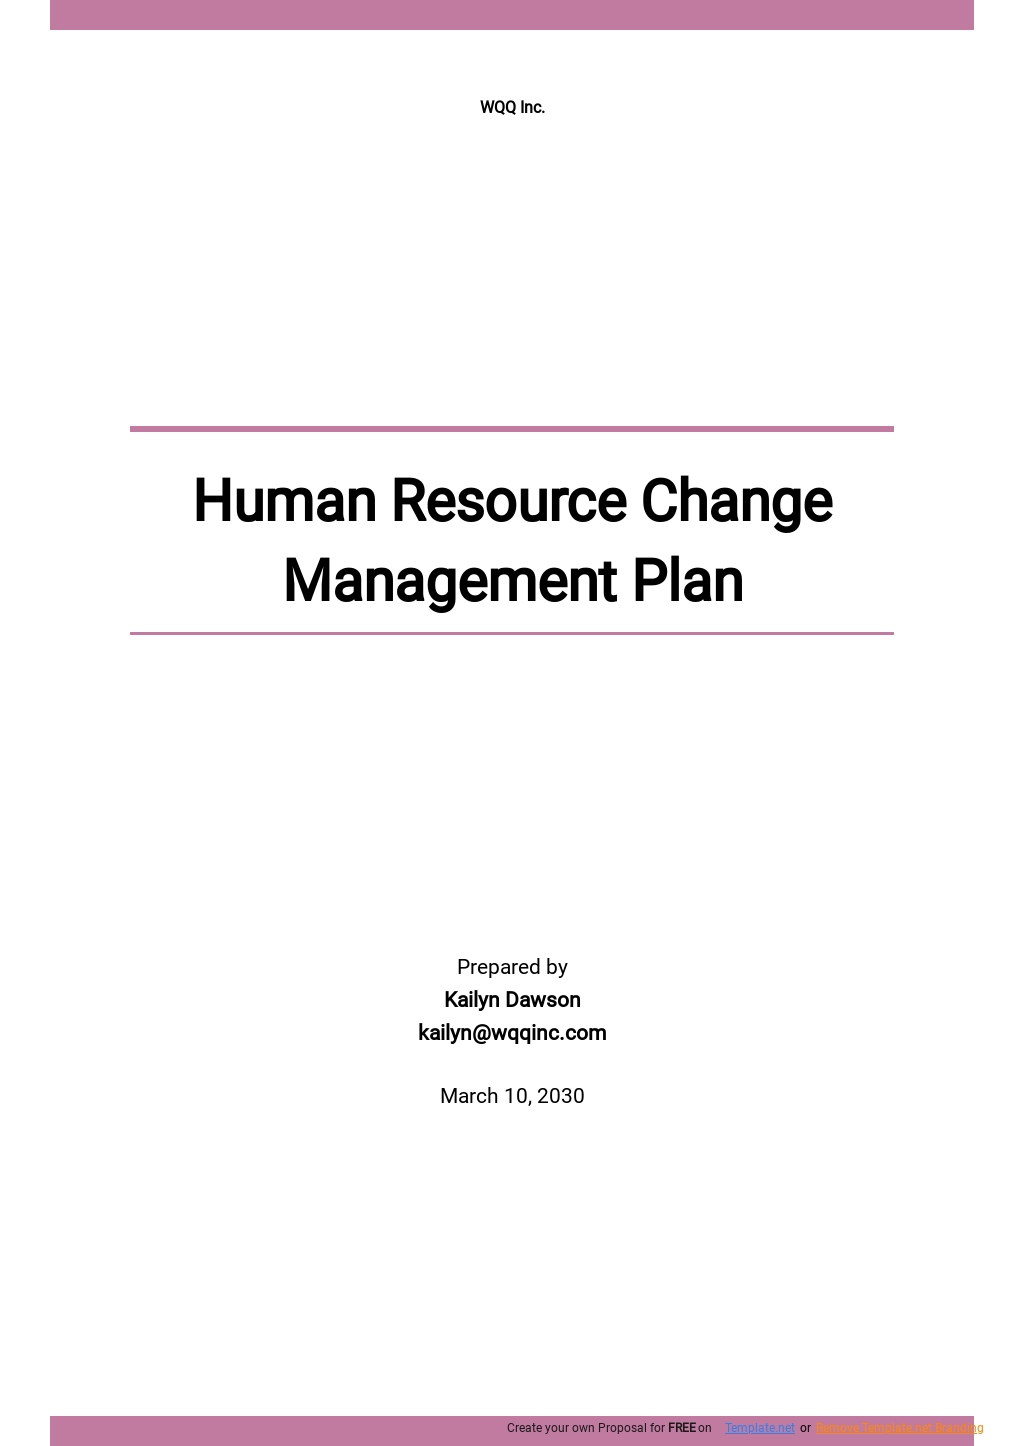 Human Resource Change Management Plan Template